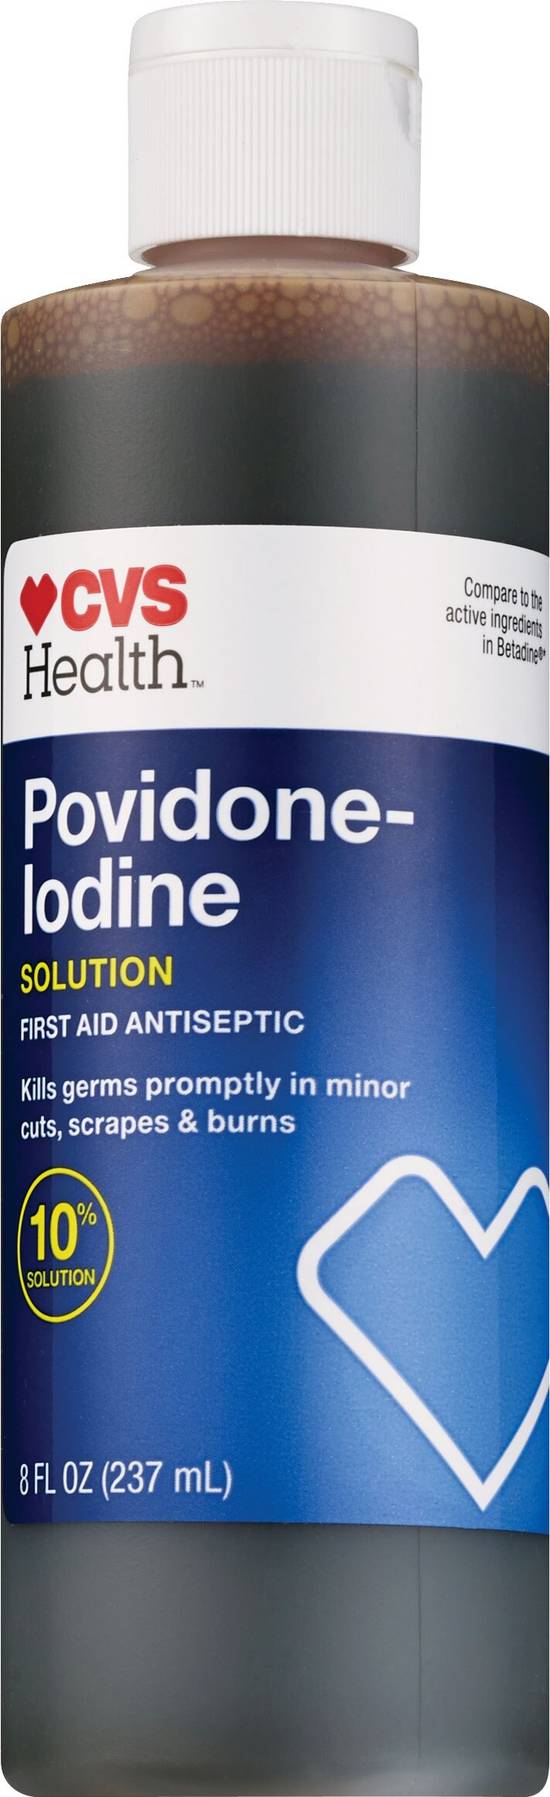 Cvs Health Povidone Iodine First Aid Antiseptic